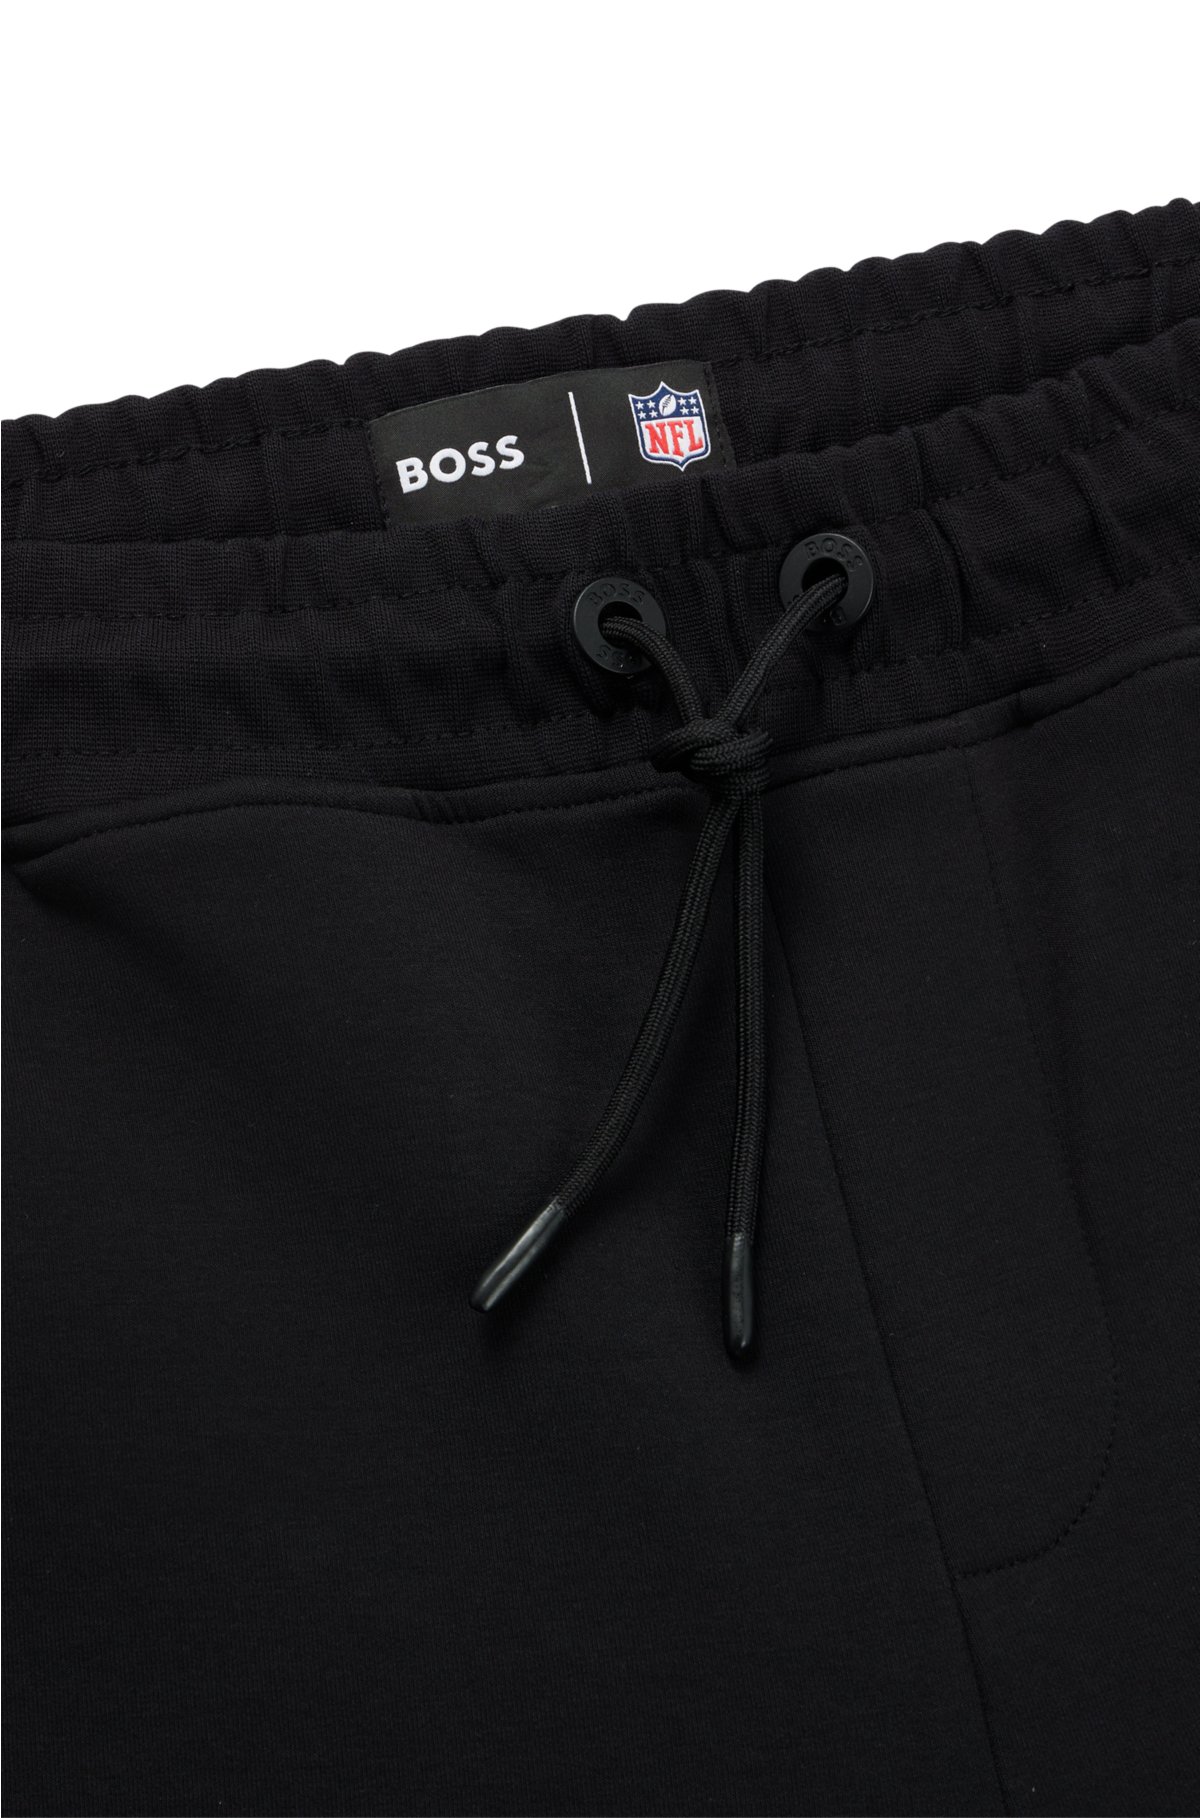 BOSS x NFL cotton-blend tracksuit bottoms with collaborative branding, Bills